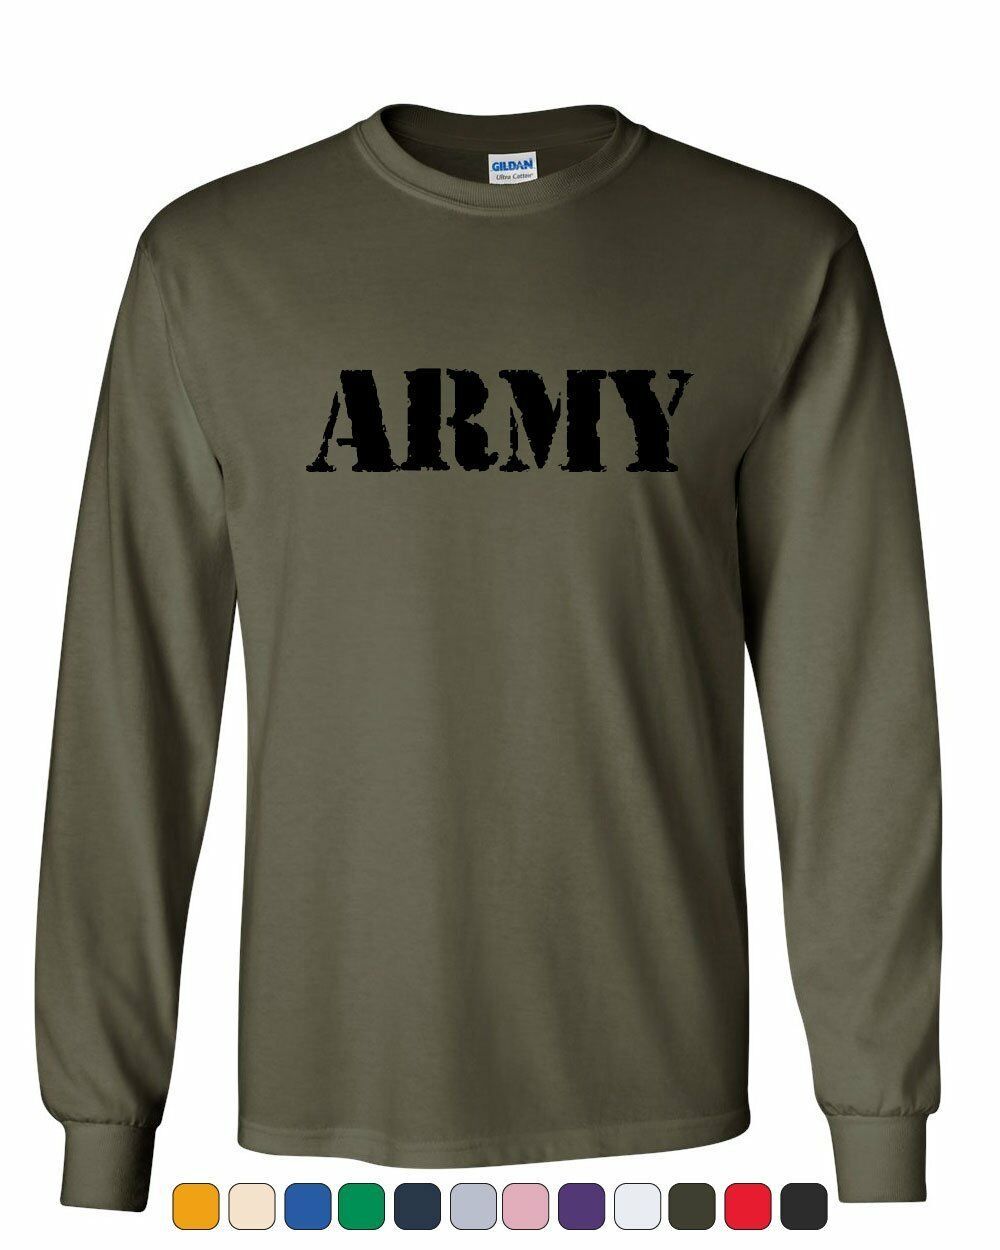 ARMY Long Sleeve T-Shirt Military Veteran POW MIA Patriotic Veteran's Day Tee